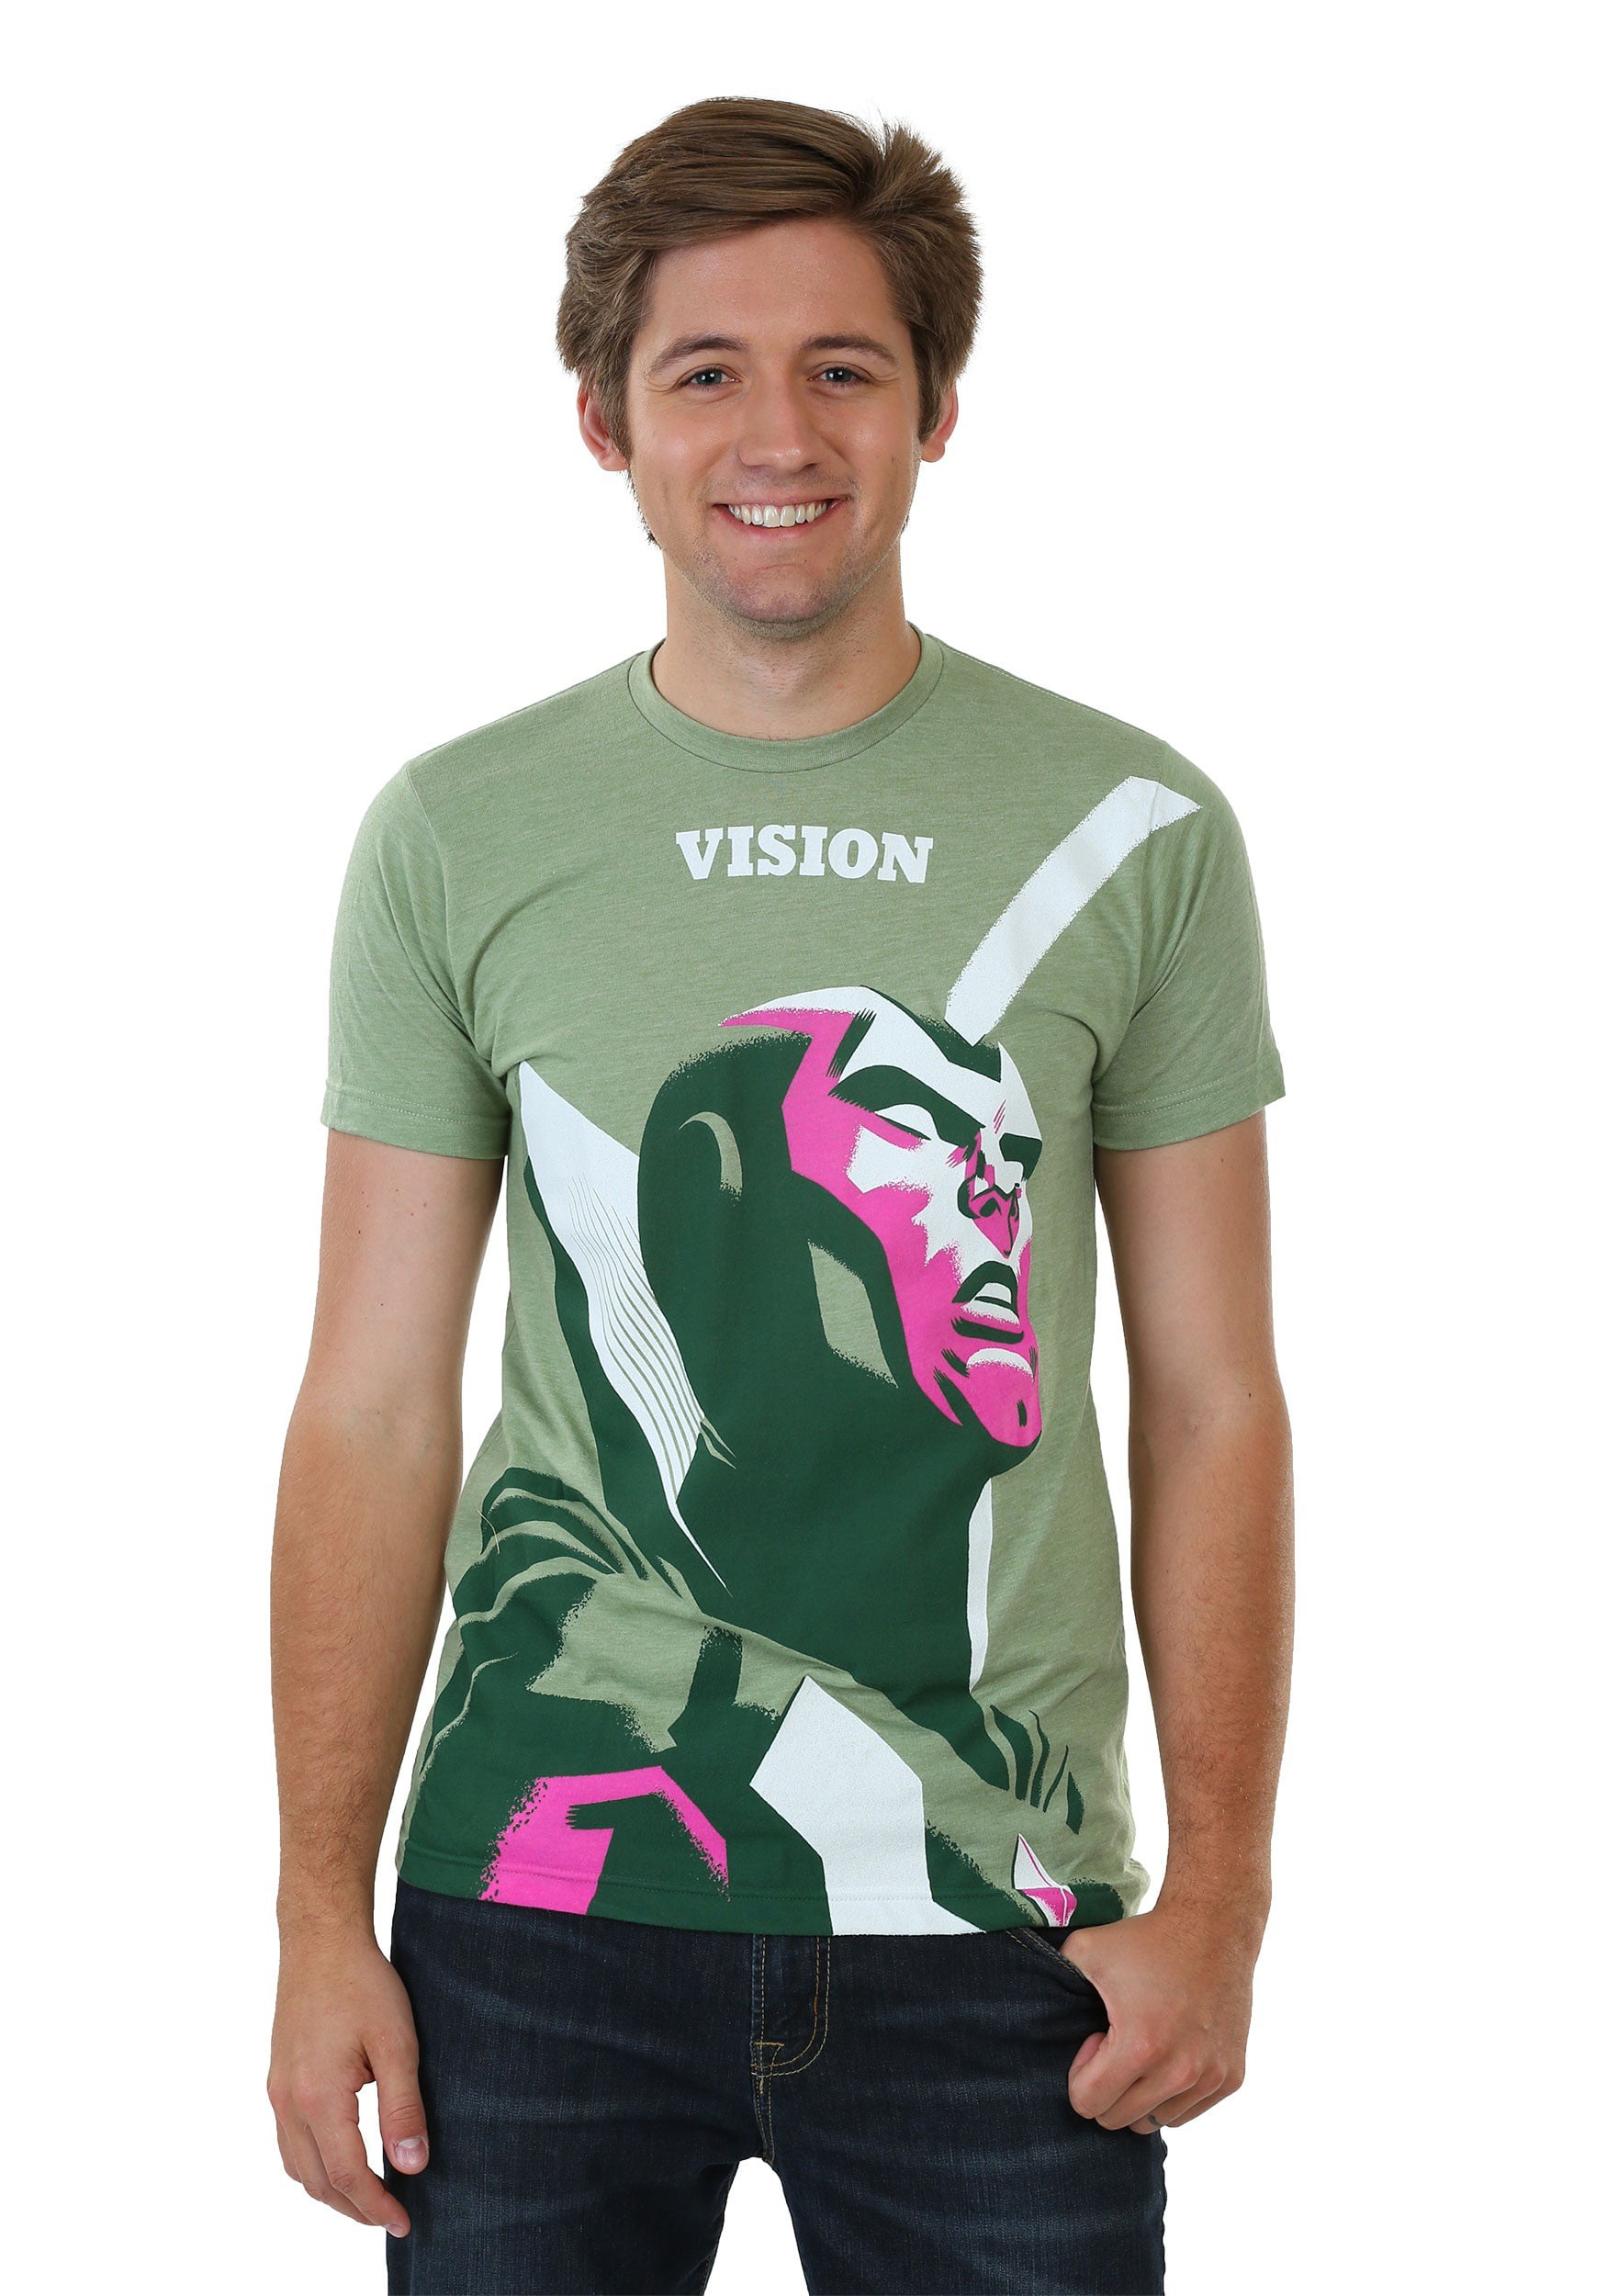 Vision Michael Cho Variant T-Shirt - Walmart.com